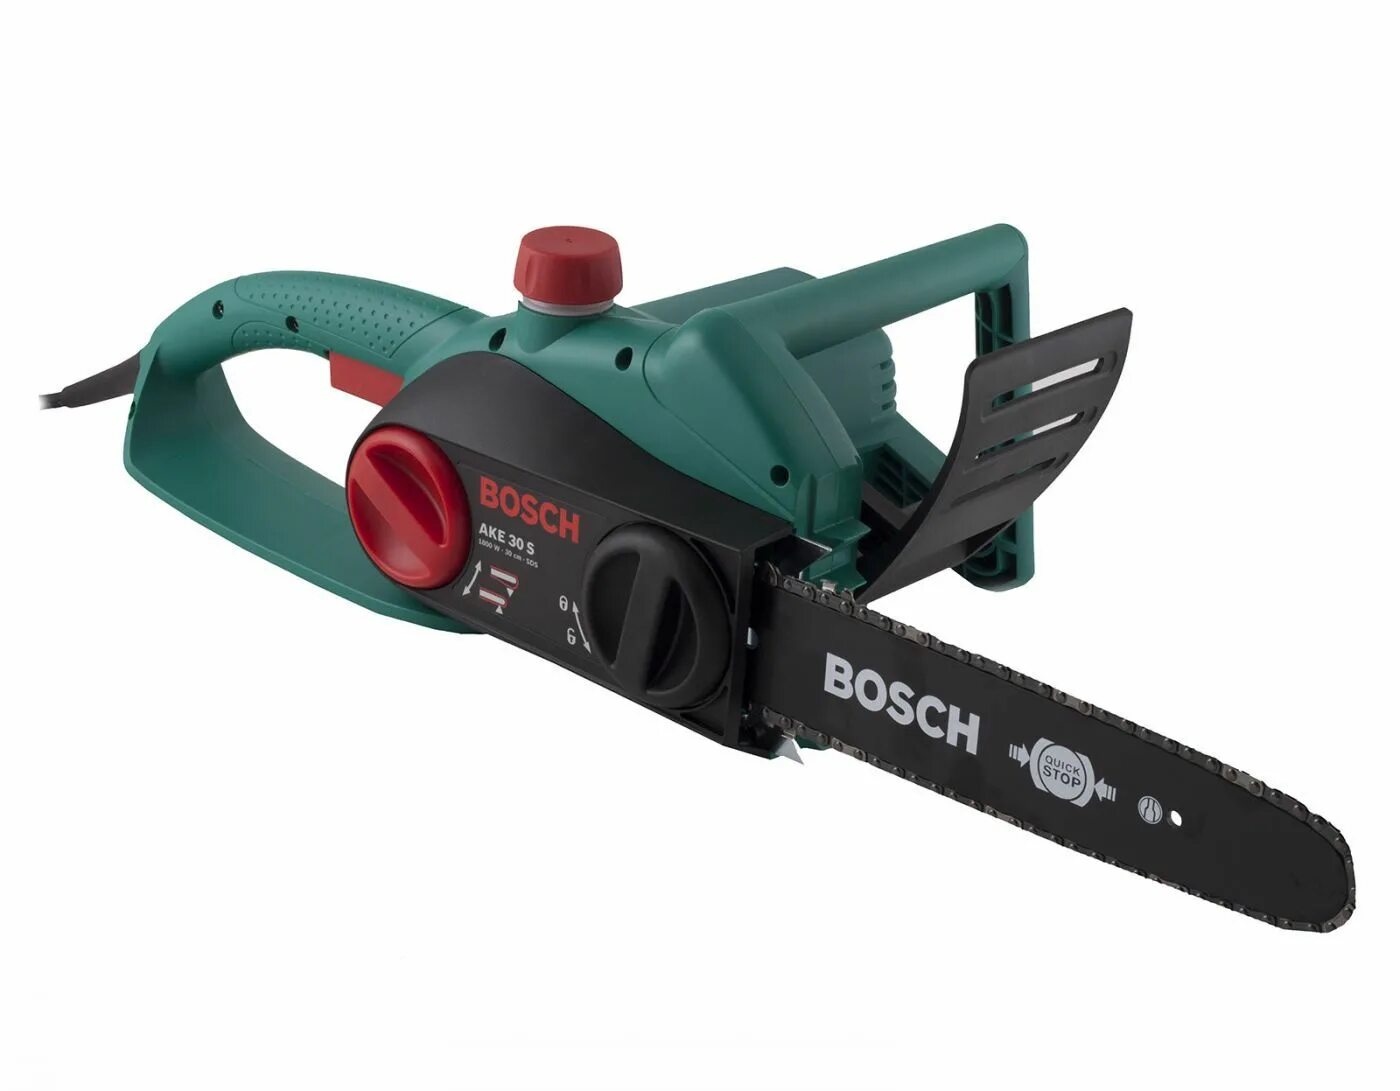 Bosch ake 30 s. Электропила цепная Bosch. Электропила Bosch ake. Ake 30s.